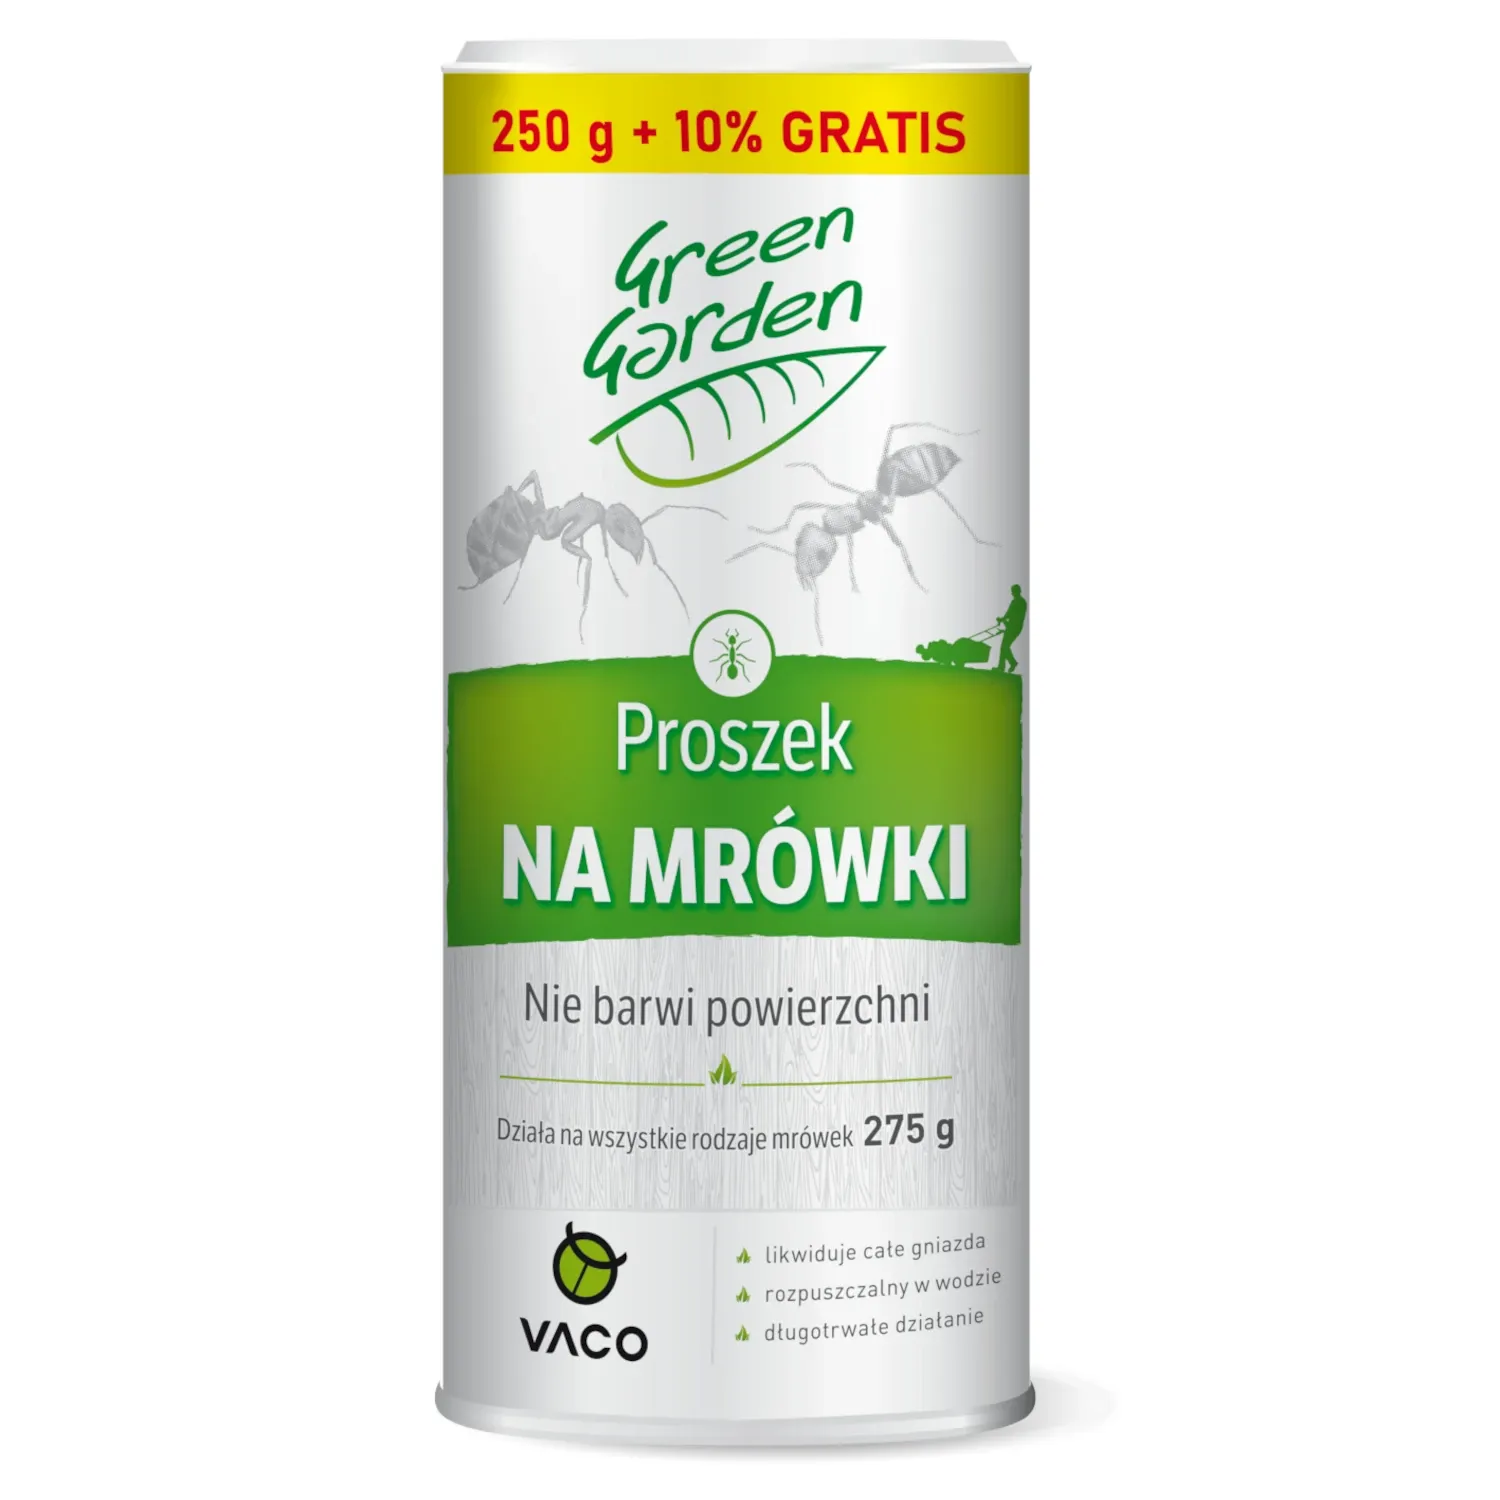 VACO GREEN GARDEN POWDER FOR ANTS (250 G + 10%) – 275 G